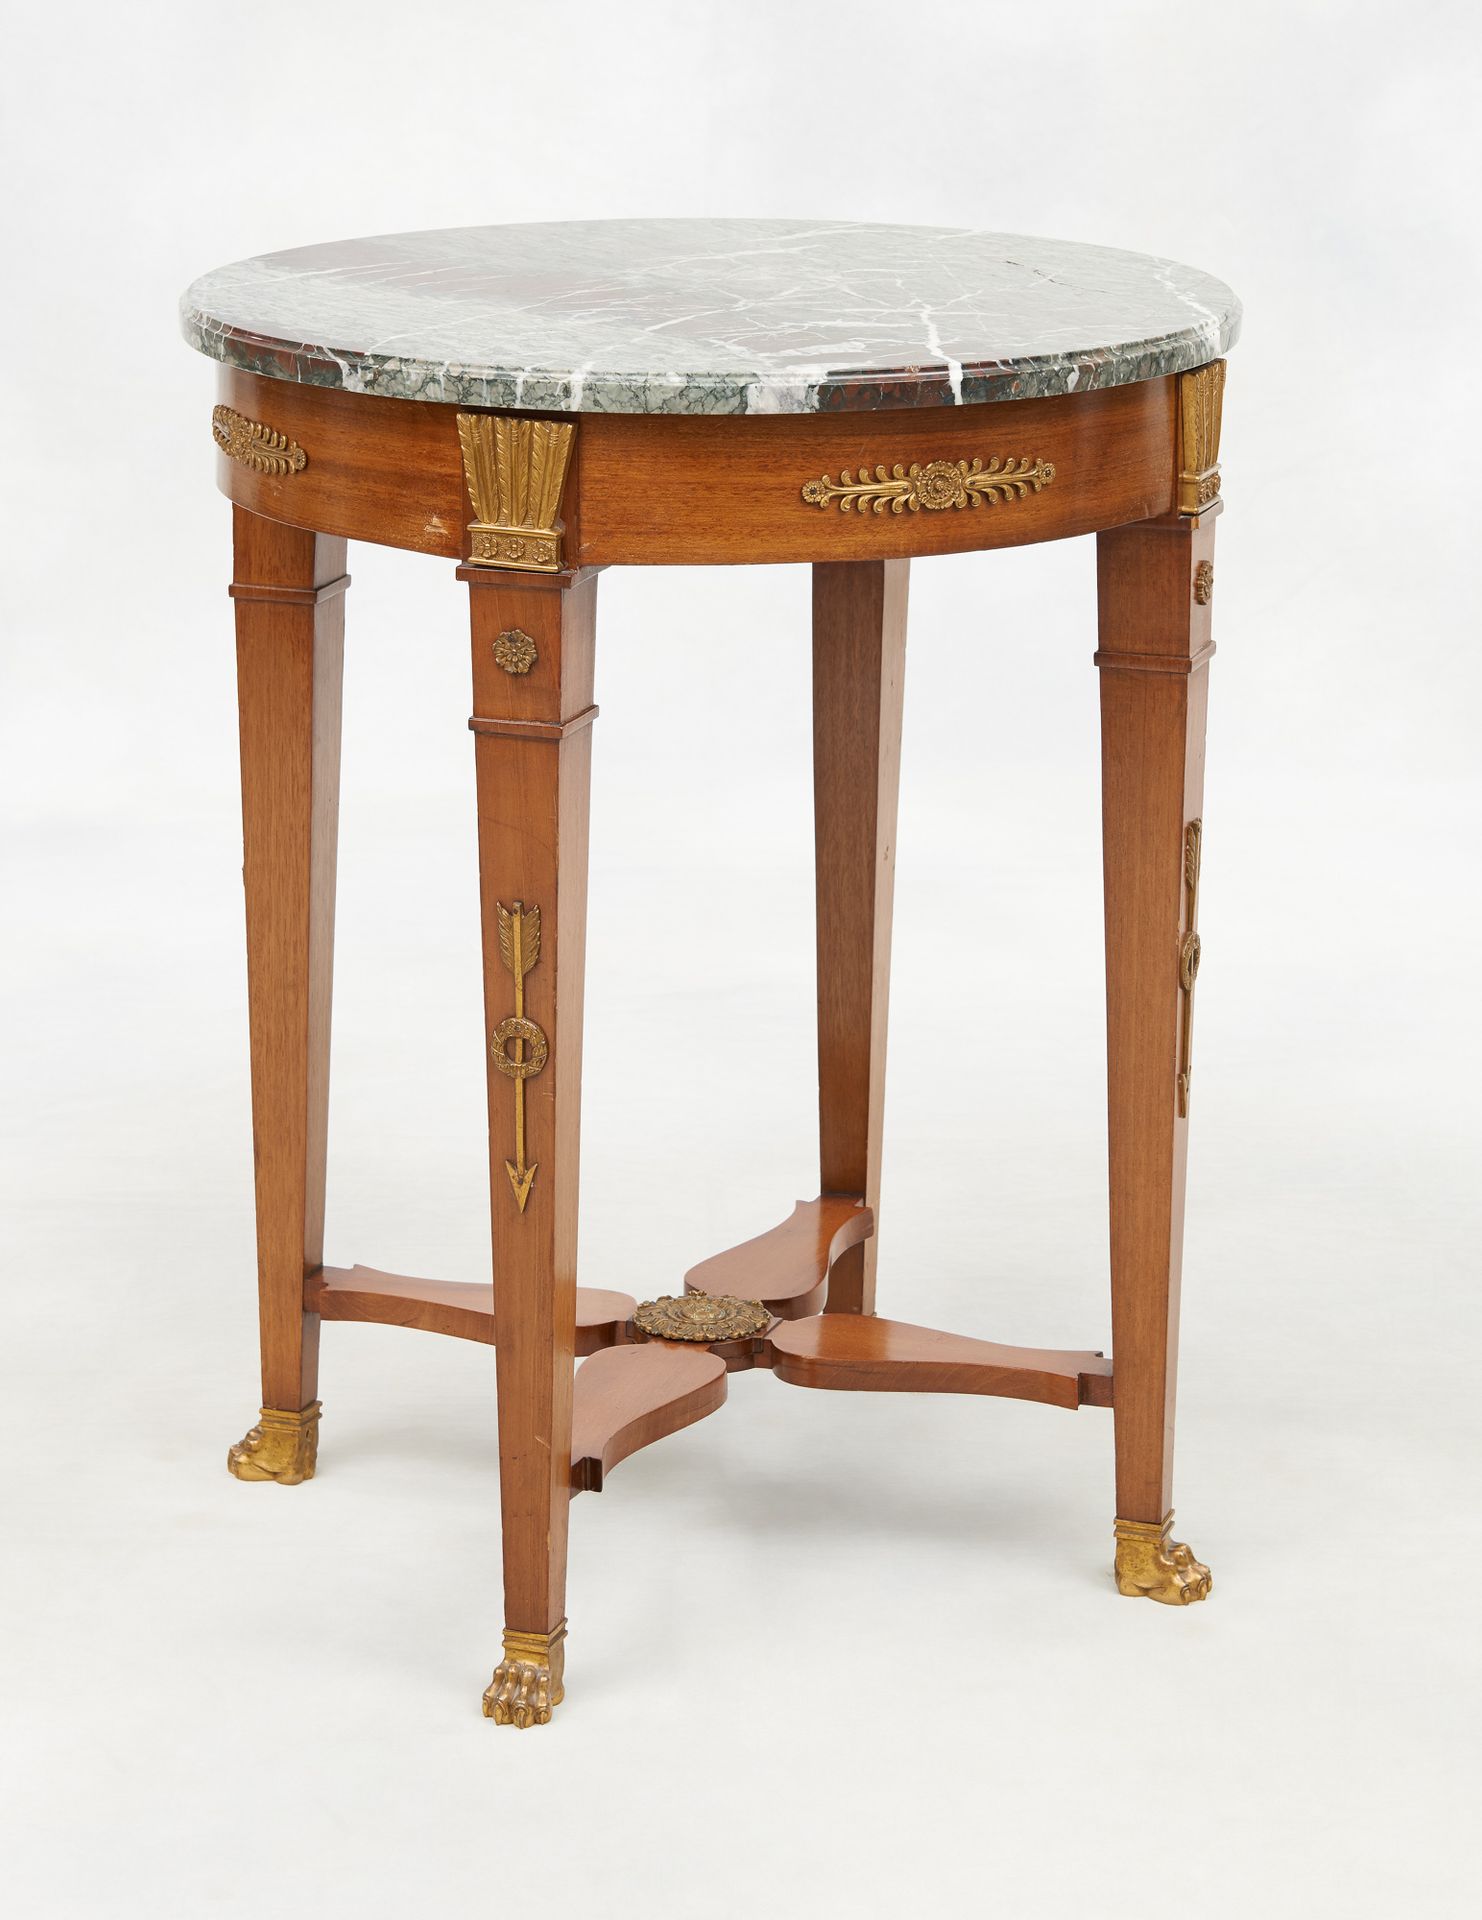 De style Empire. 家具：桃花心木基座桌，大理石桌面和镀金的青铜亮点，搁置在交错的腿上，末端是狮子的爪子。

尺寸：高：72直径59厘米。